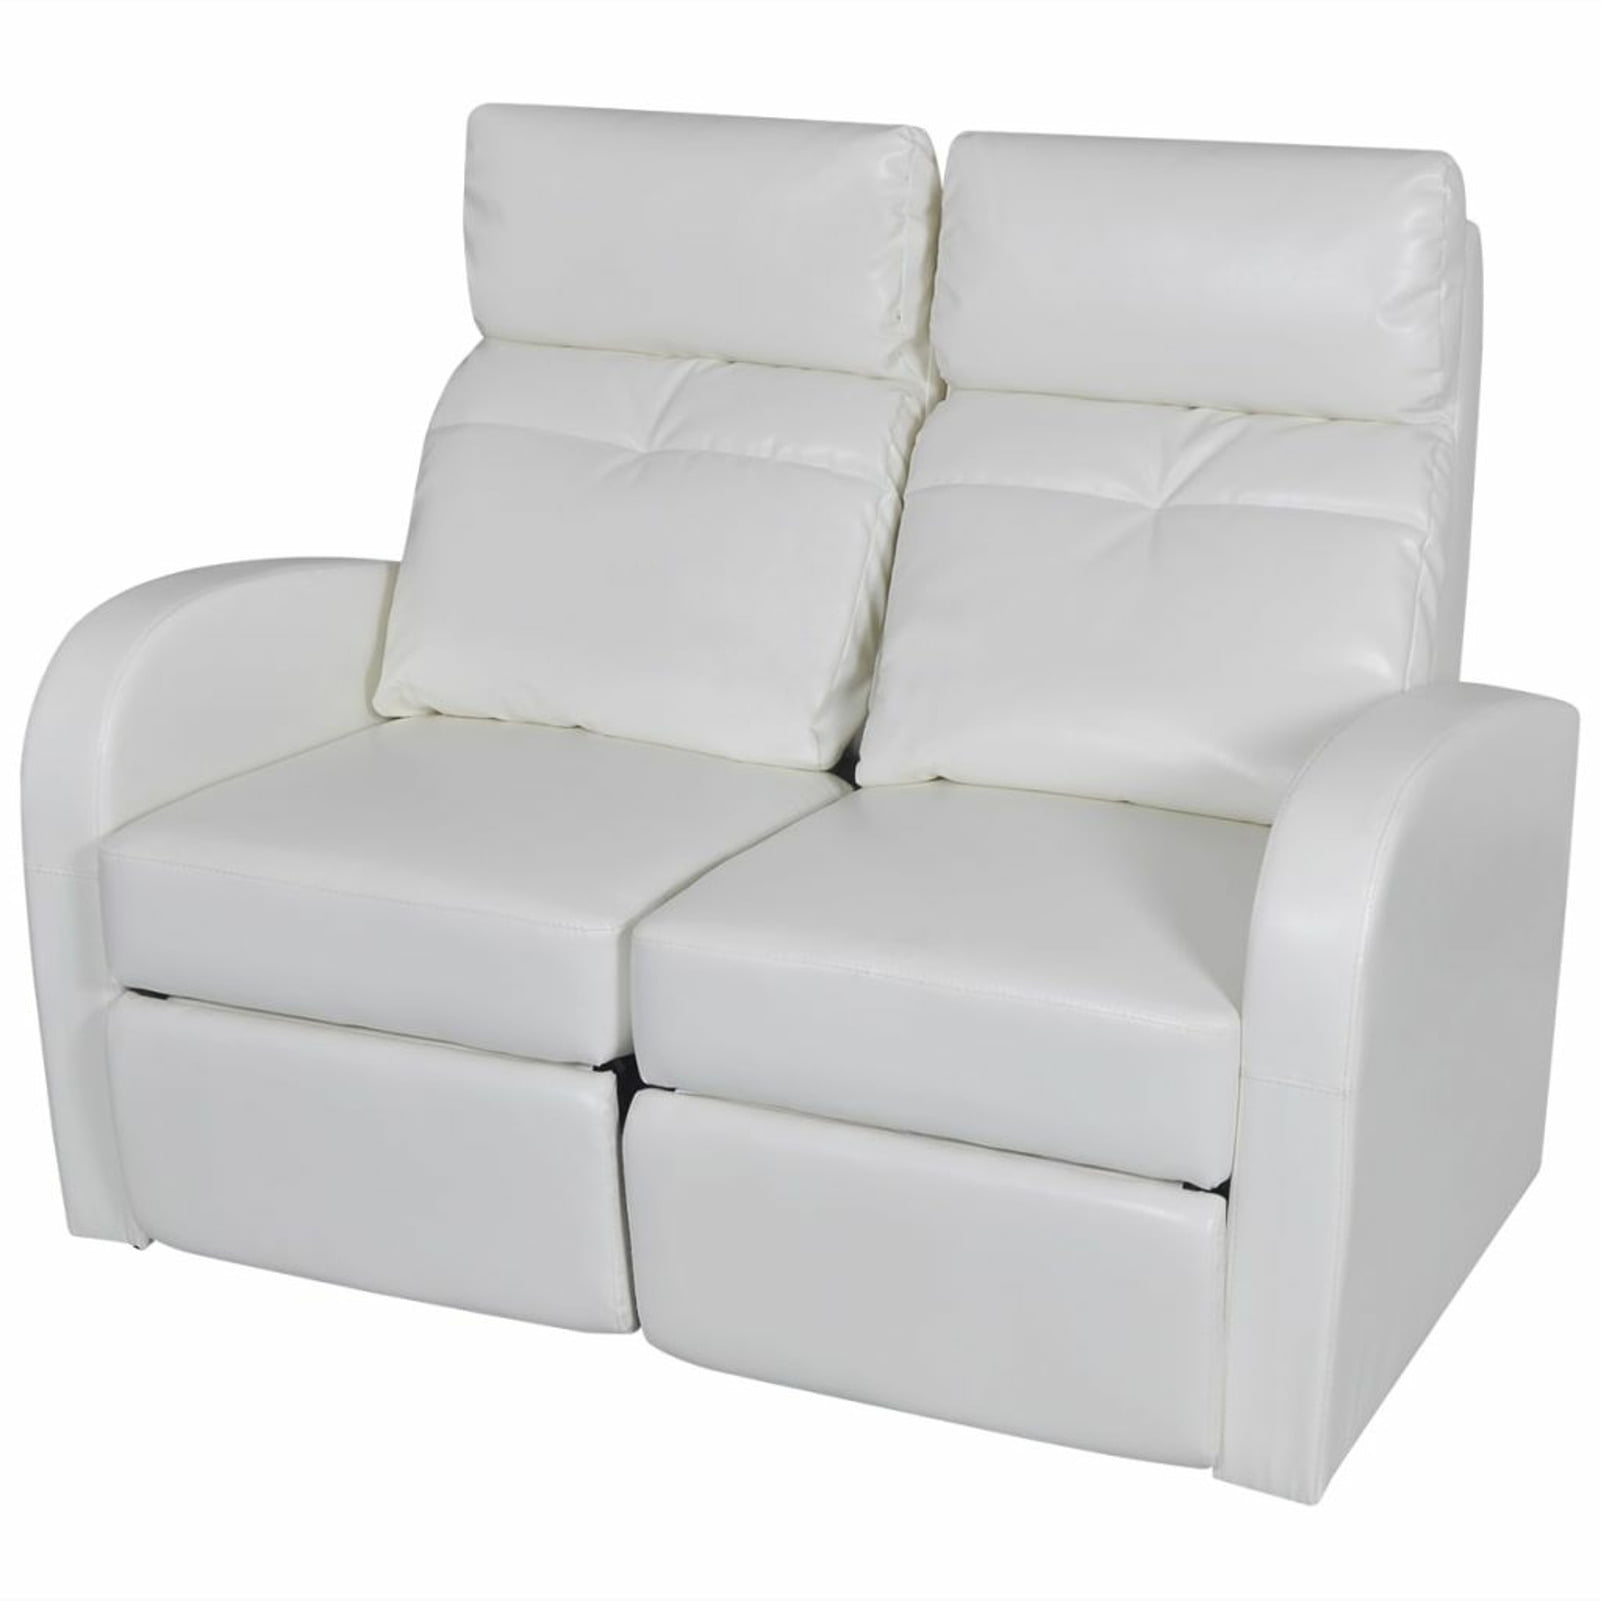 Htovila 2  Seater  Home Theater Recliner Sofa  White Faux 